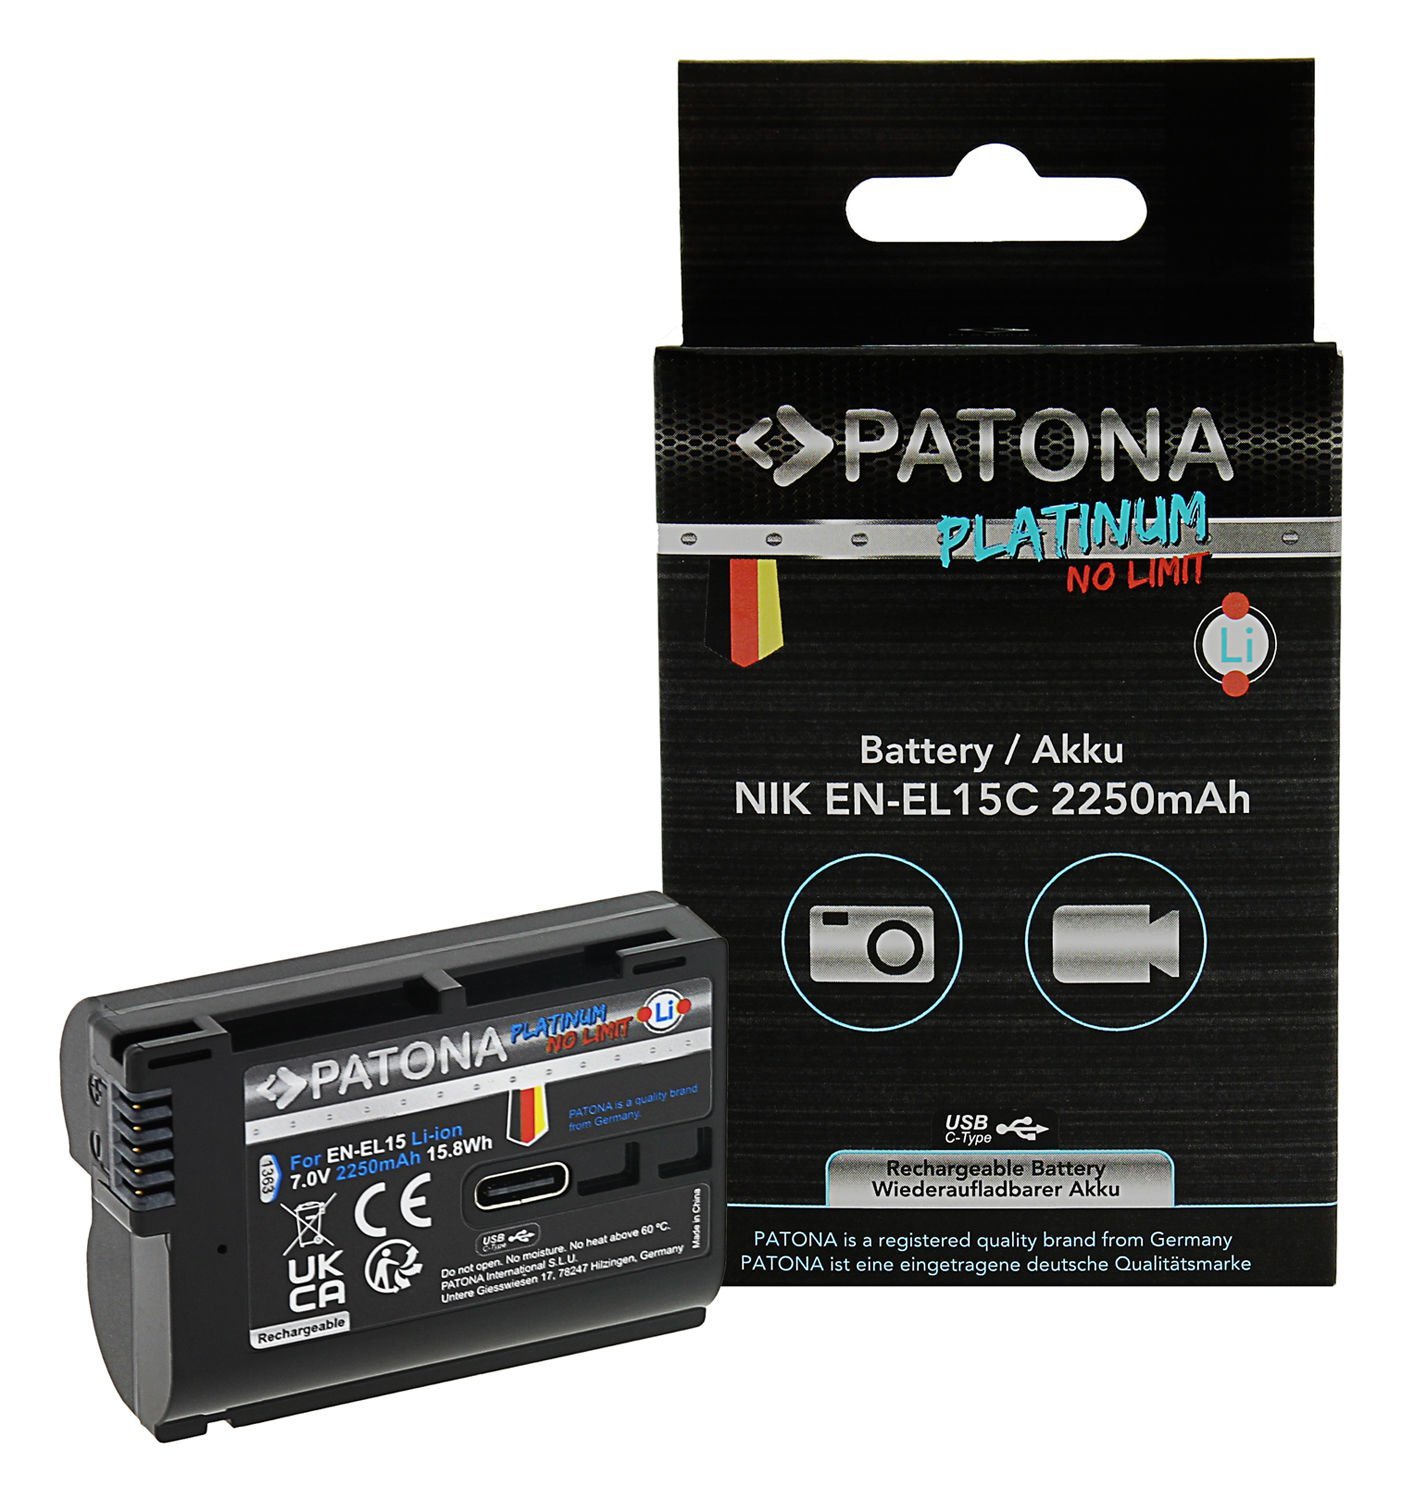 Patona Platinum Nikon EN-EL15C USB-C Girişli Batarya Pil